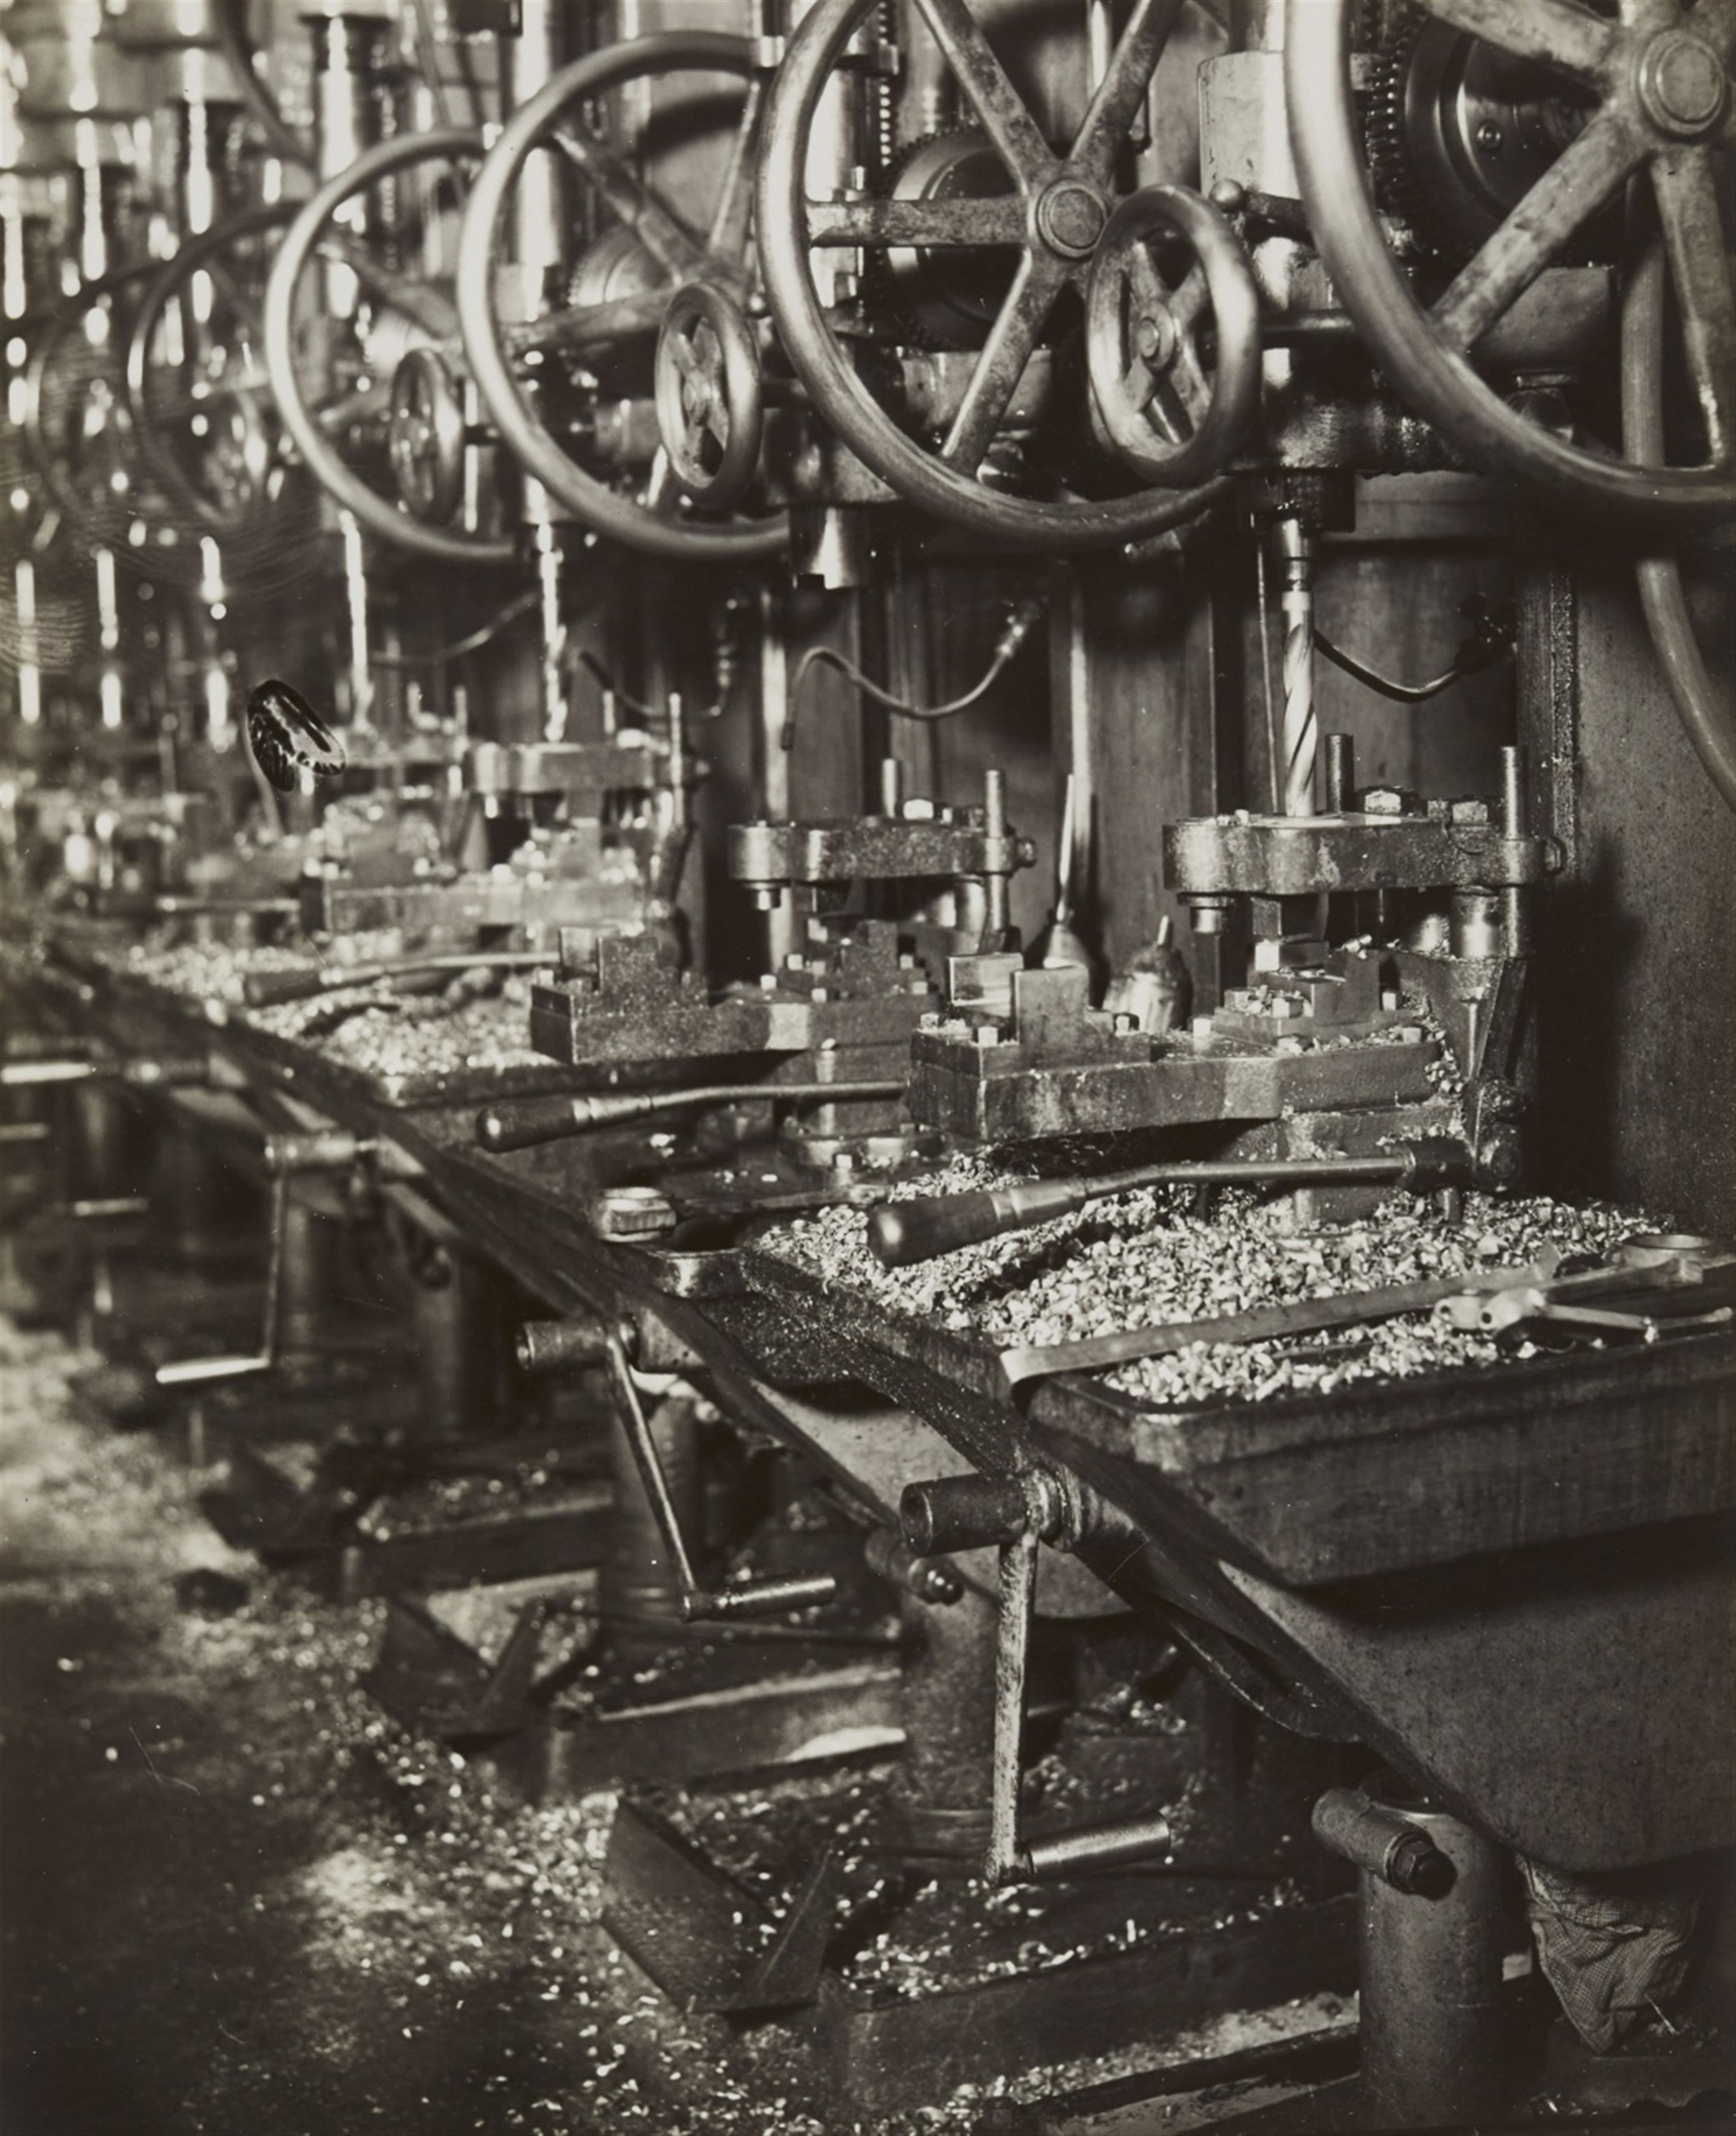 Germaine Krull - Bohrmaschinen (Drilling machines) - image-1